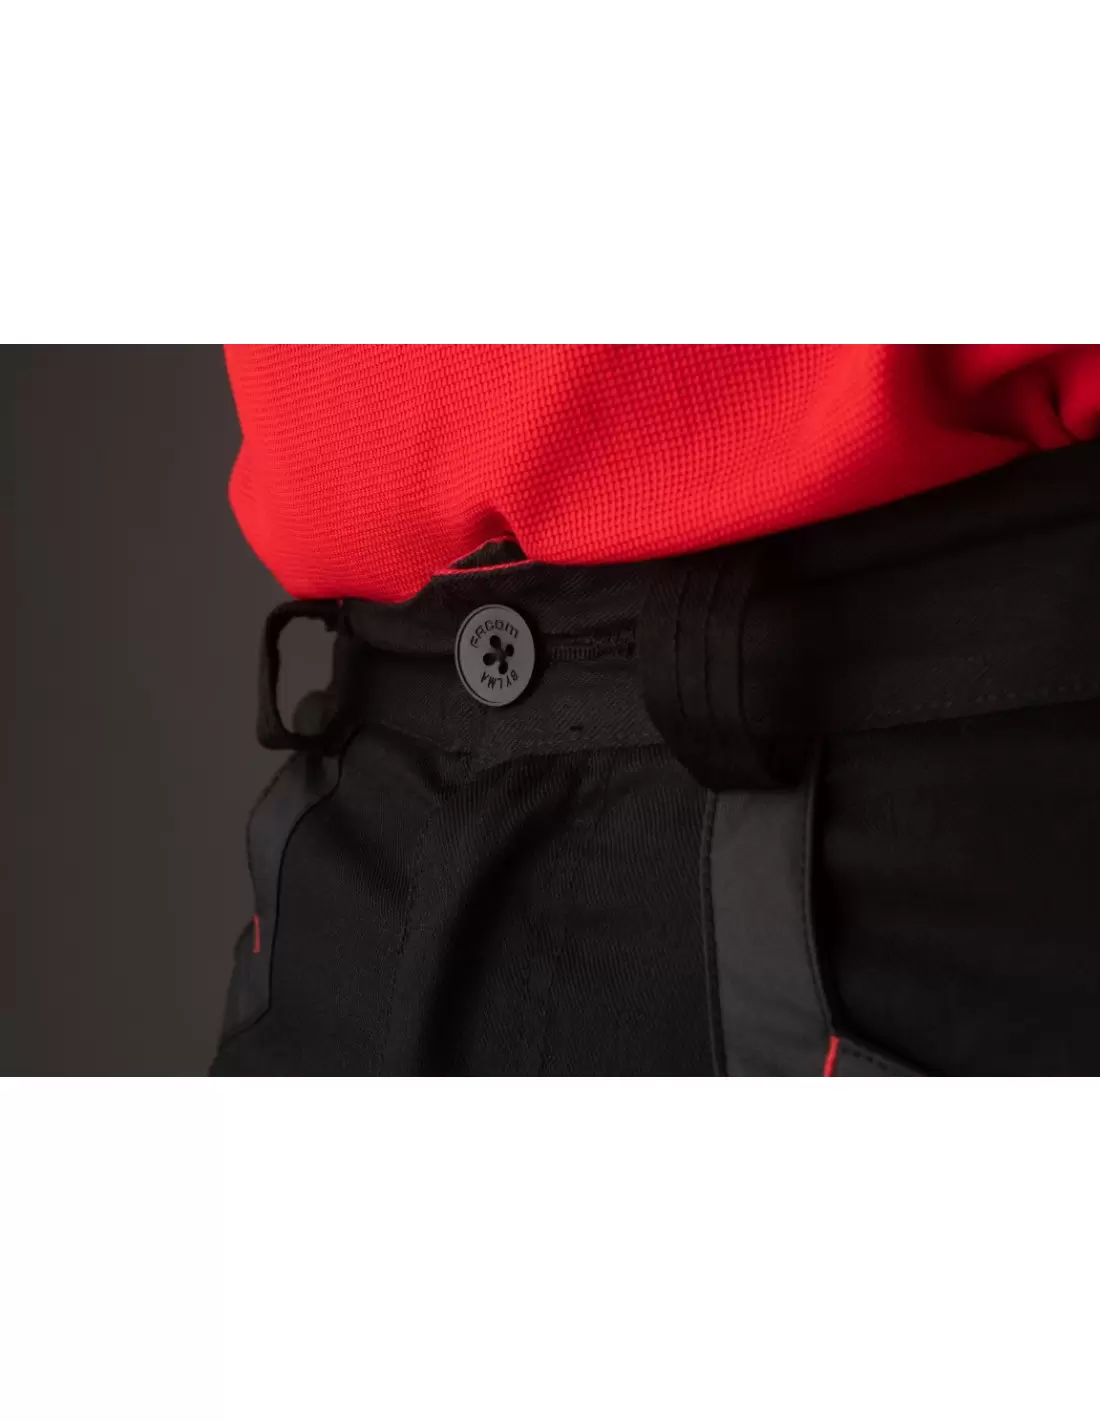 Pantalon de travail stretch avec poches genouillère STRAP | FXWW1011E -  Facom